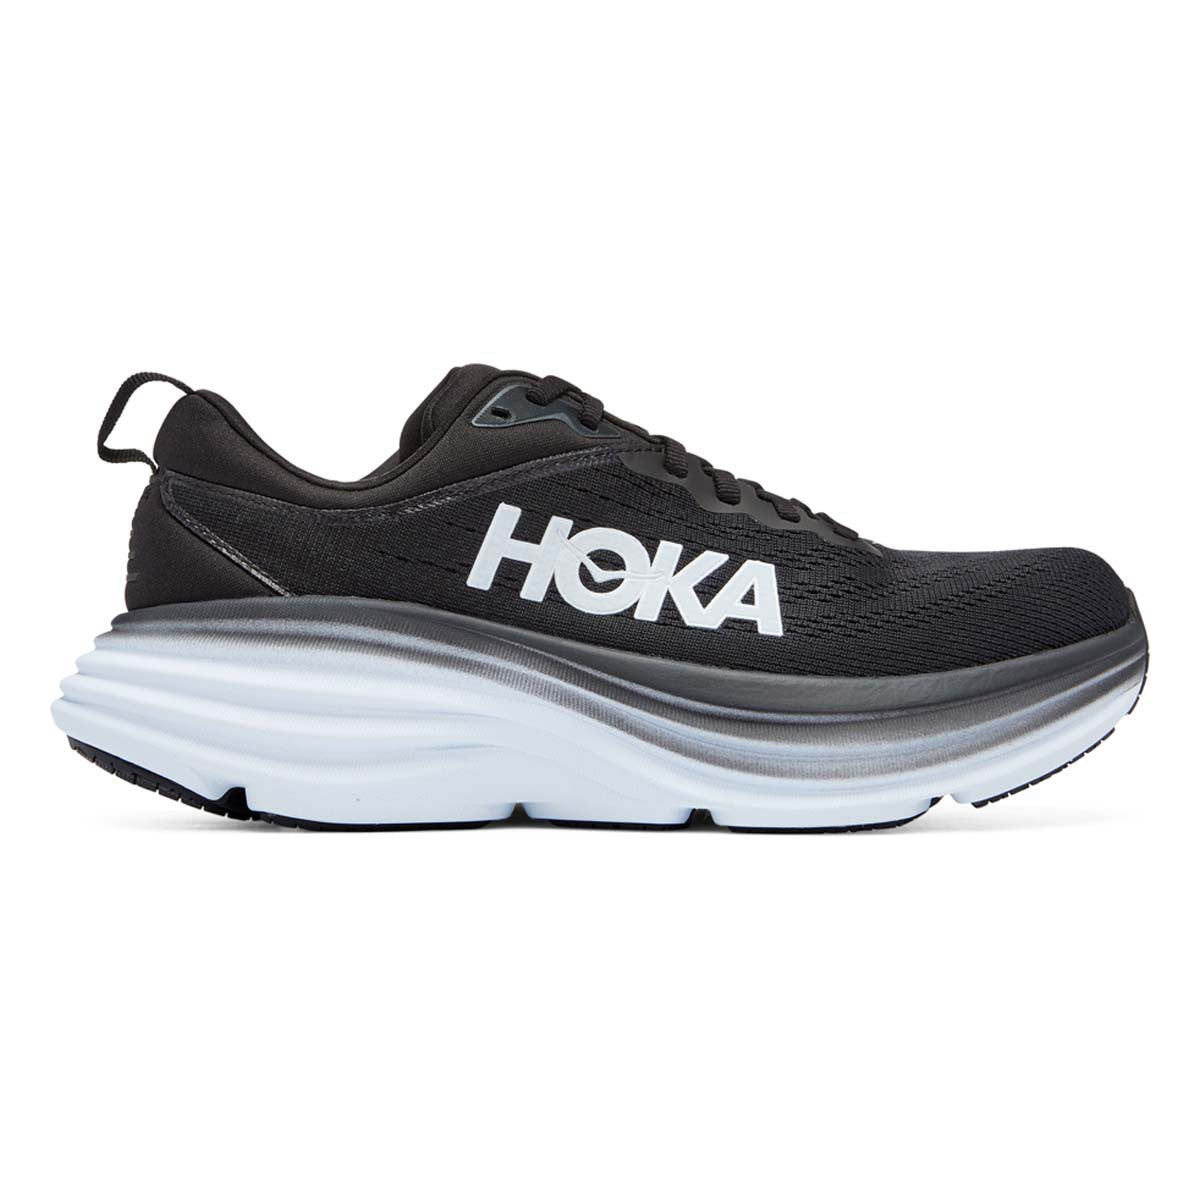 Hoka One One Bondi 7 Women's Size 8.5 D Wide Gray Peach Running Shoes